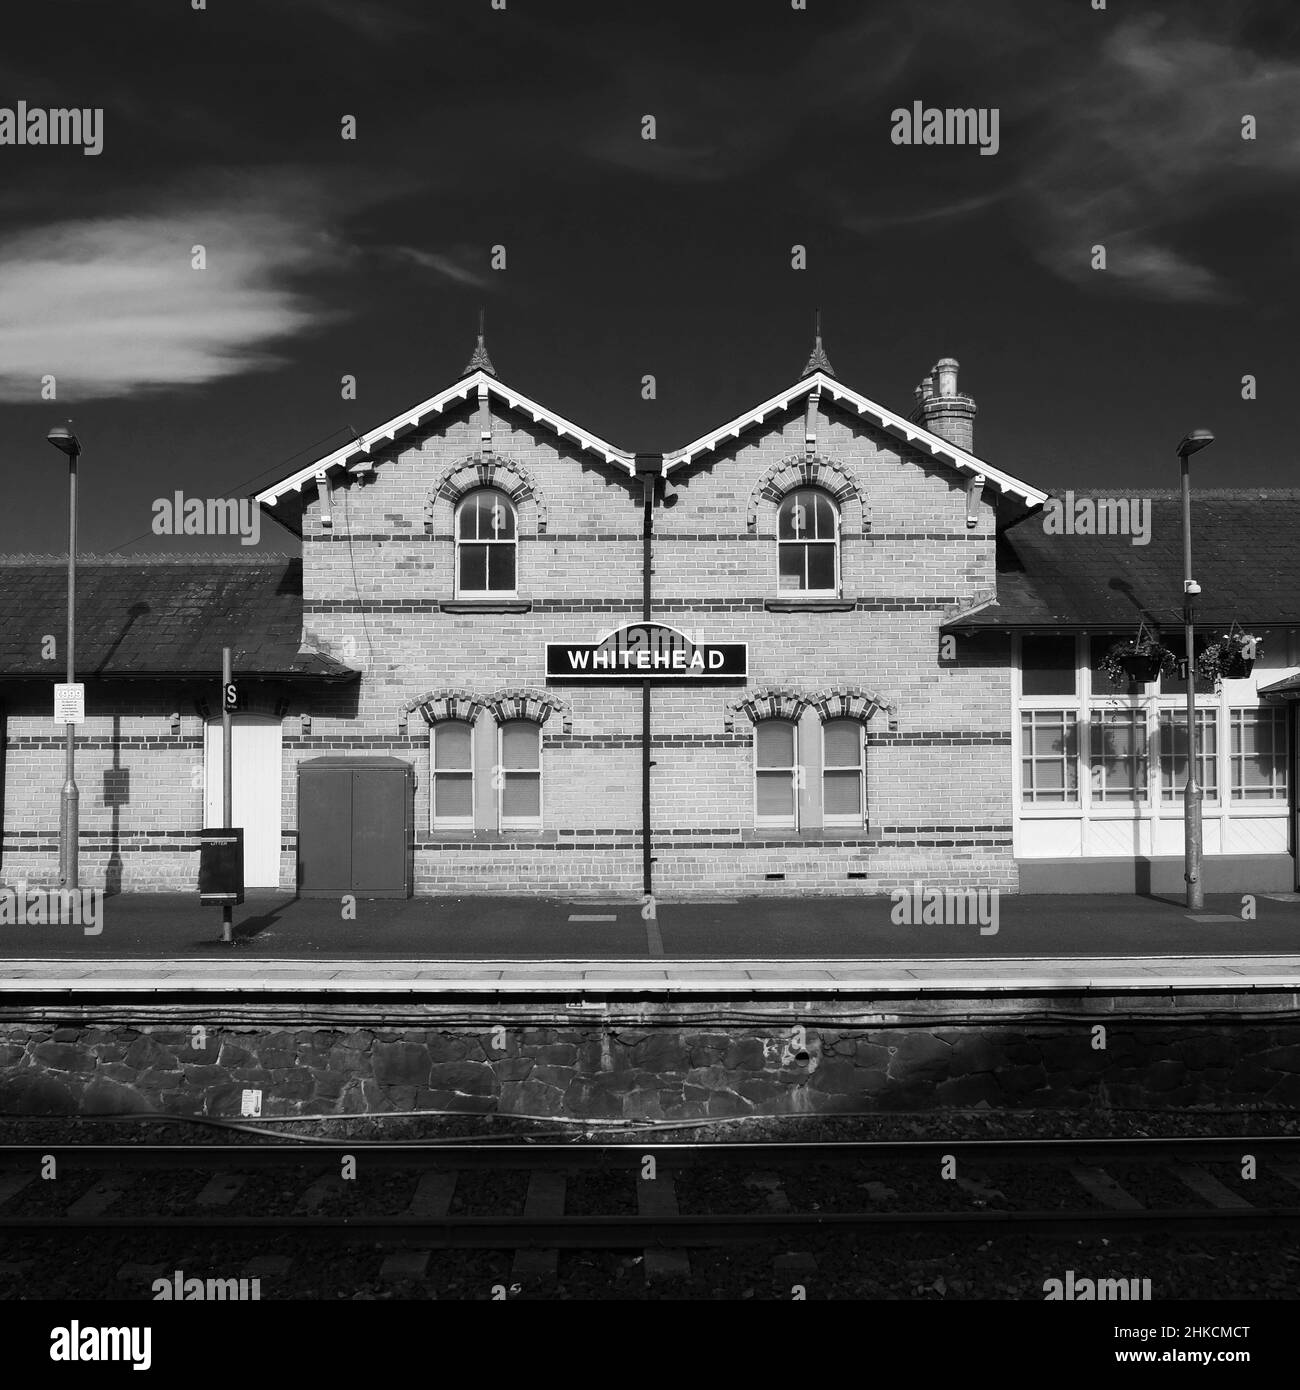 The Railway Station at Whitehead, County Antrim, Northern Ireland. Stock Photo